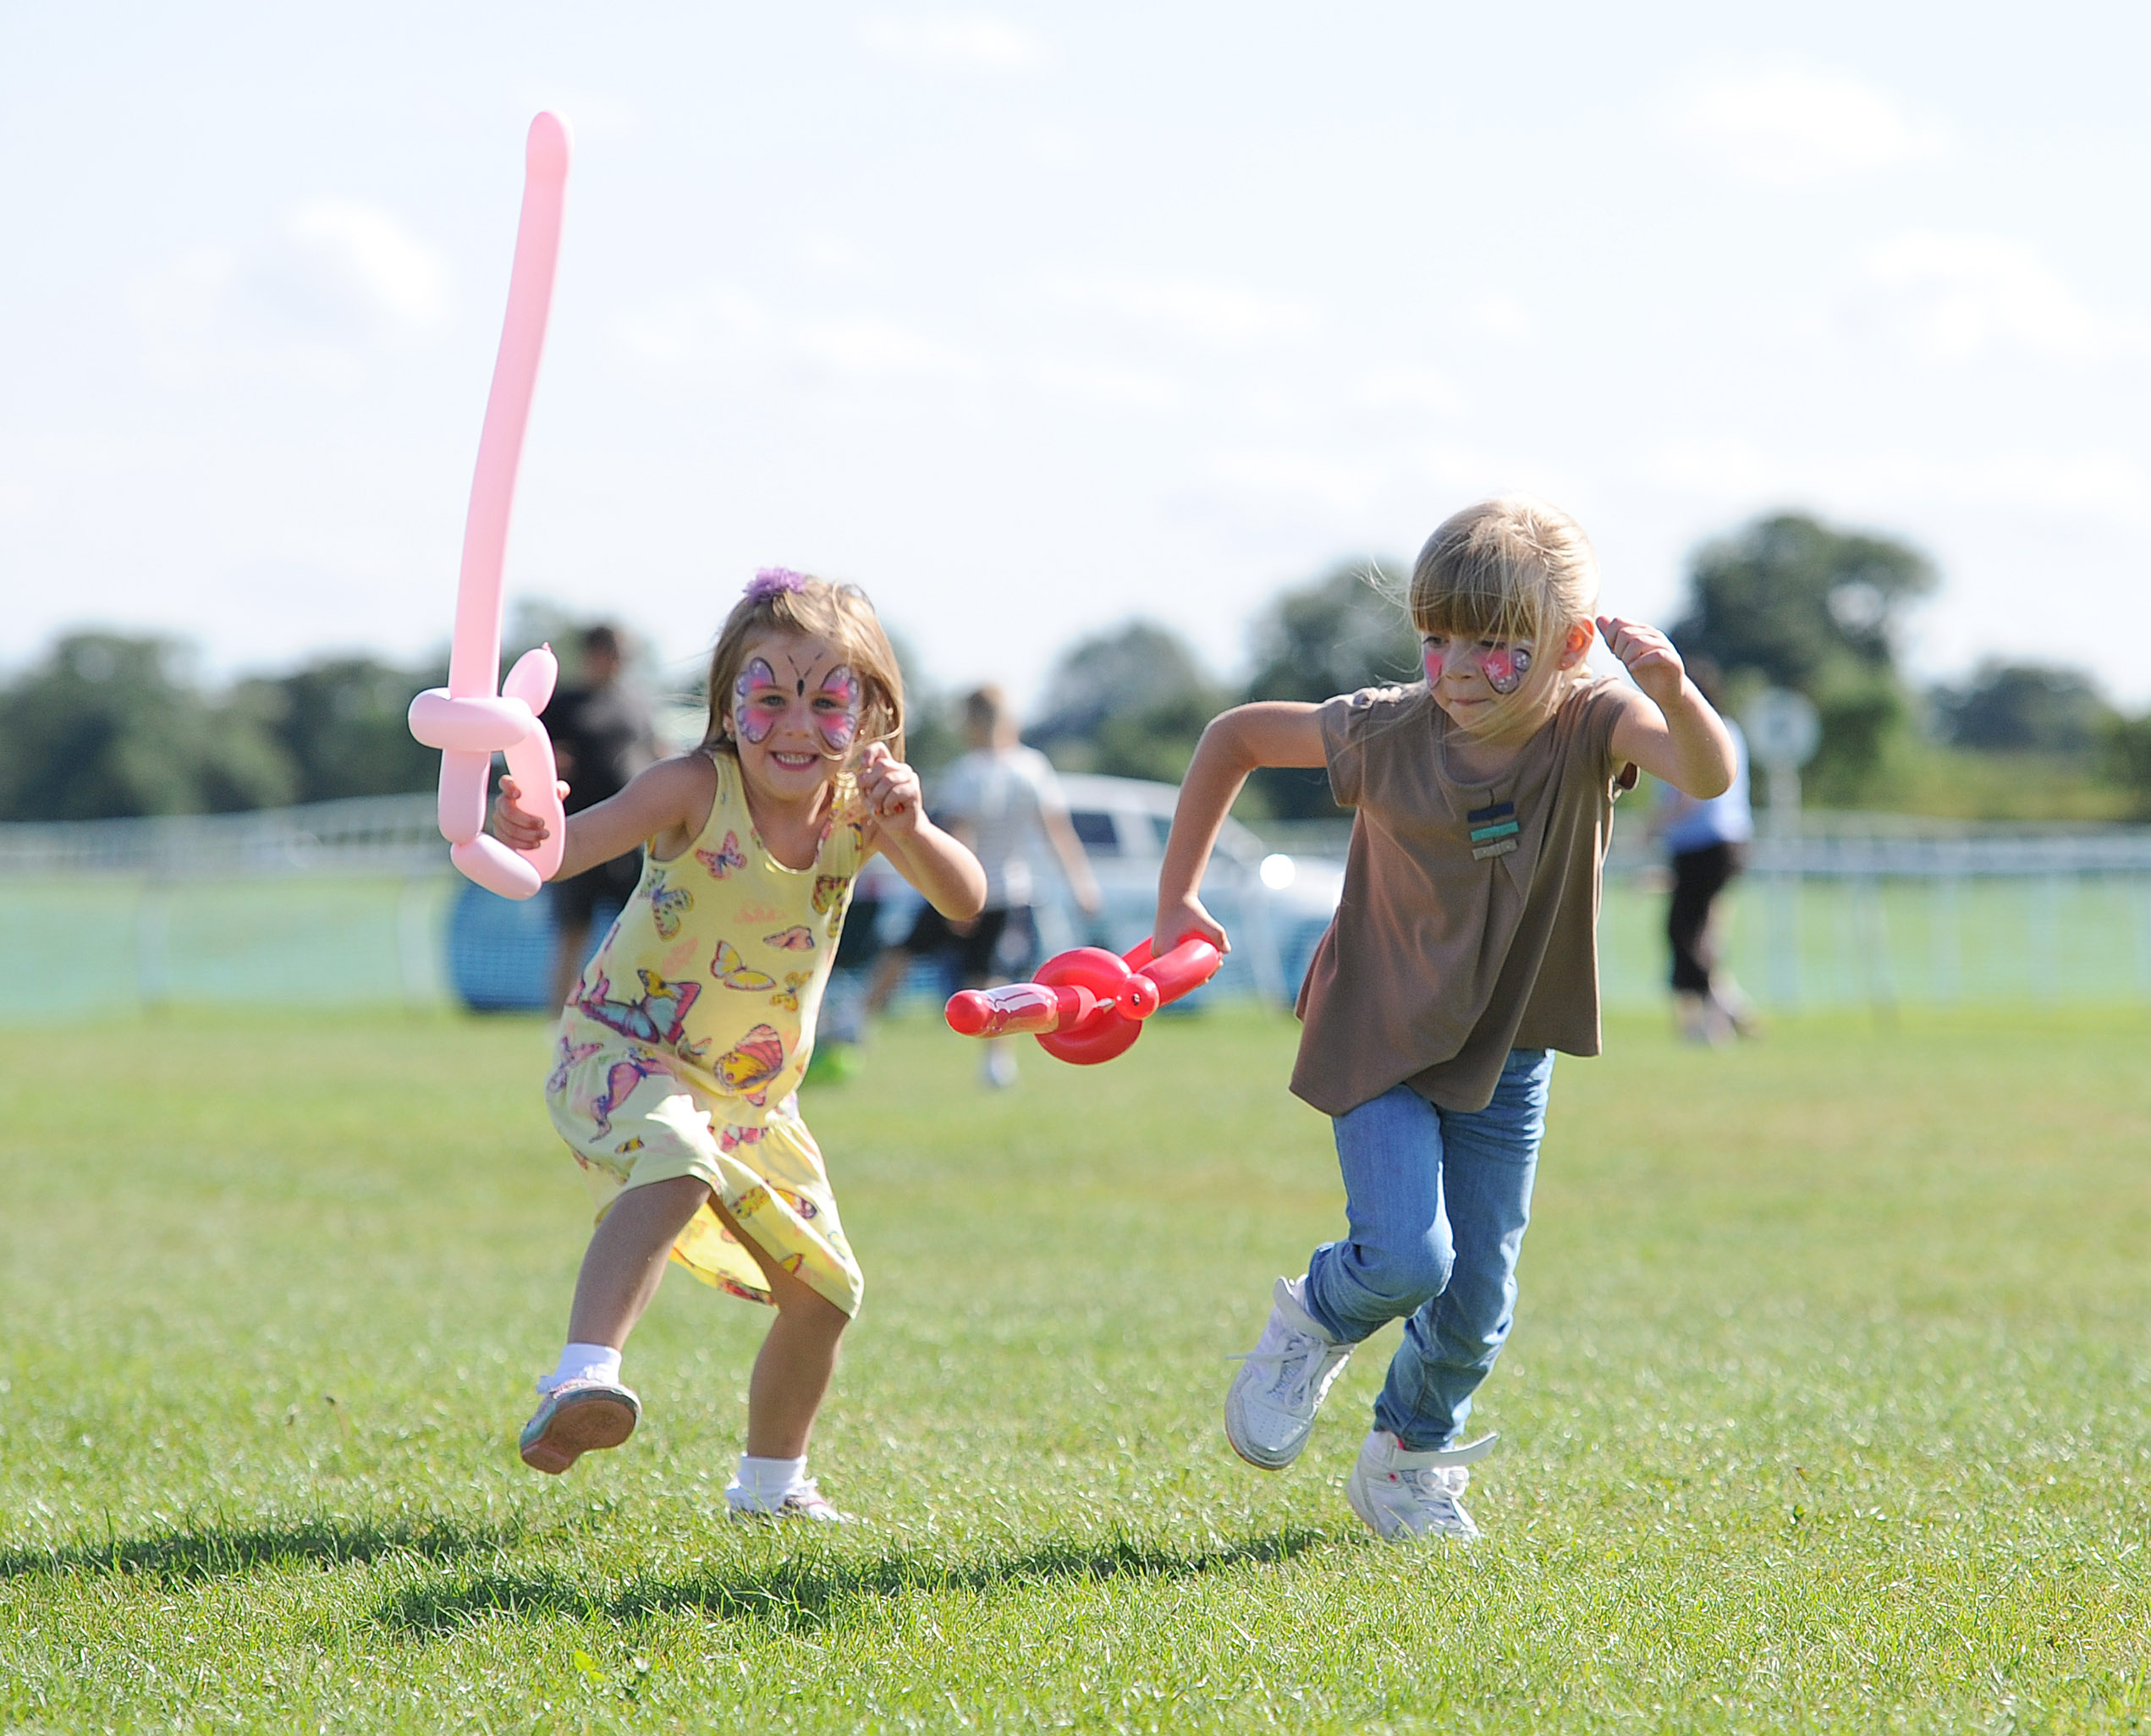 Children's Day at Ripon Racecourse.Copyright Ripon Racecourse